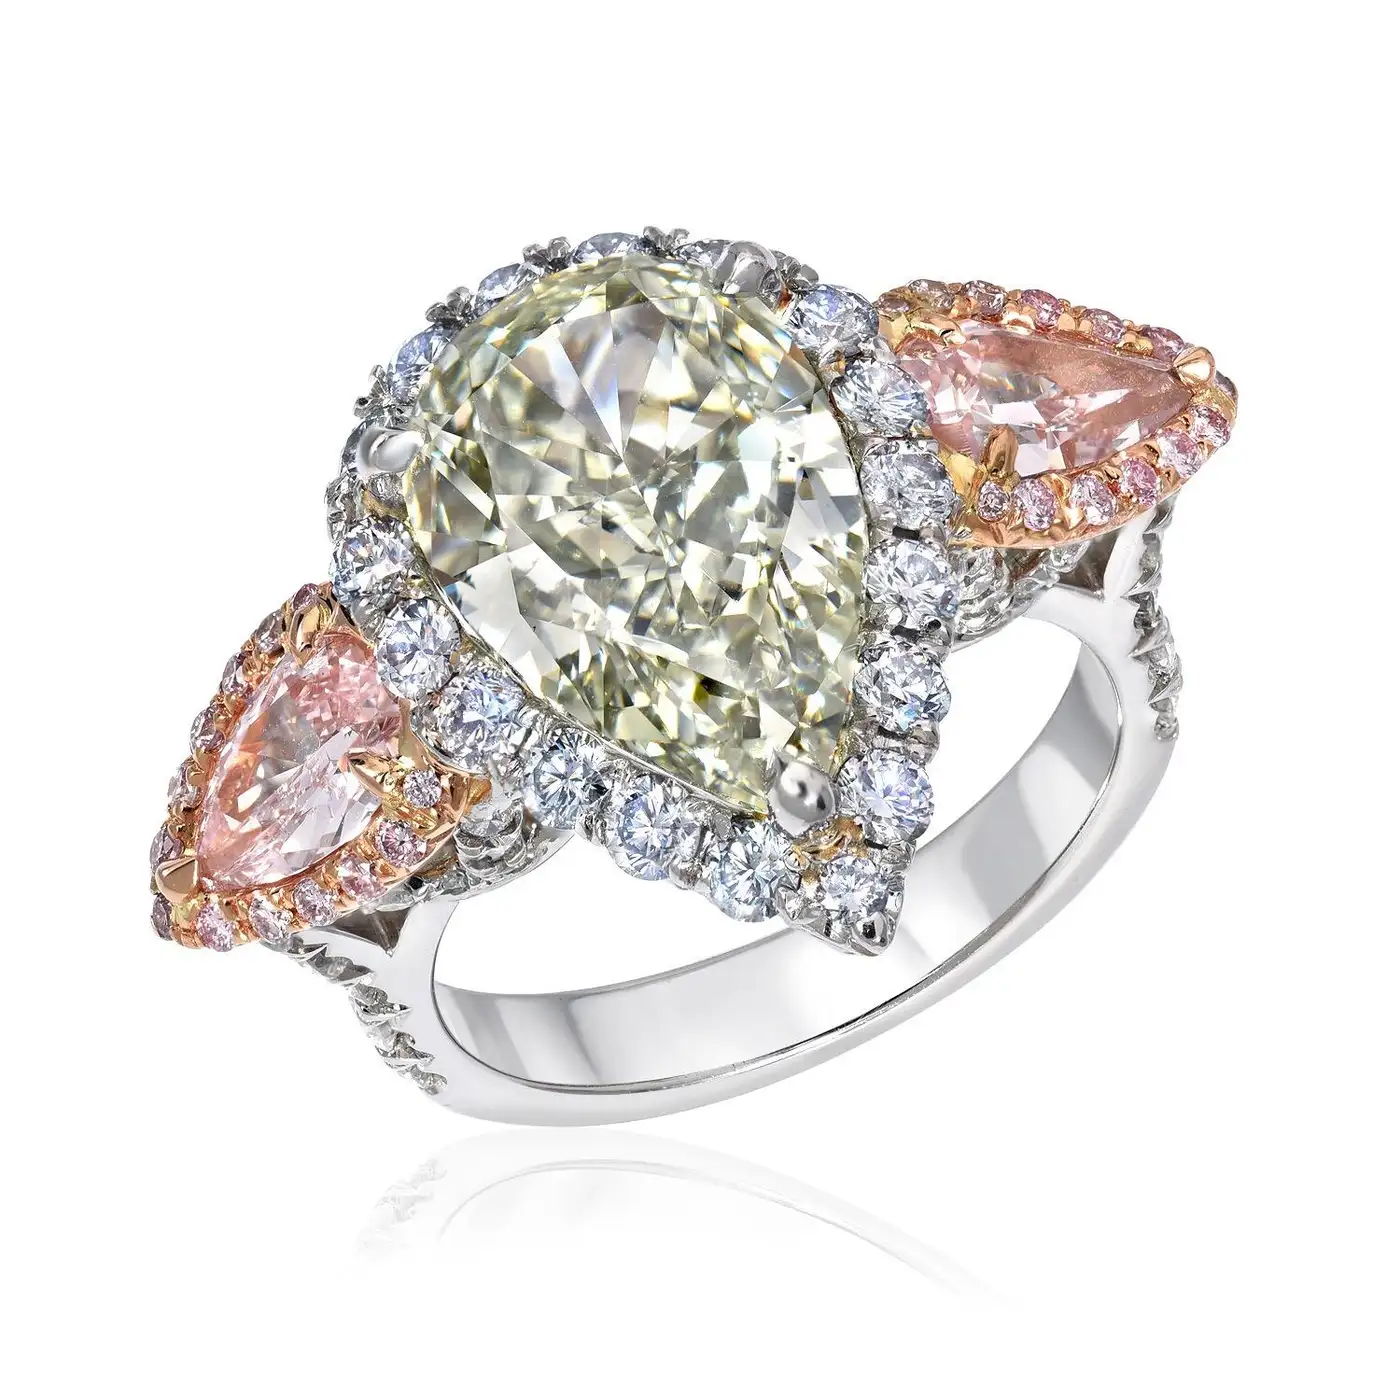 Green-Diamond-Ring-5.16-Carat-Pear-Shape-GIA-Certified-2.webp